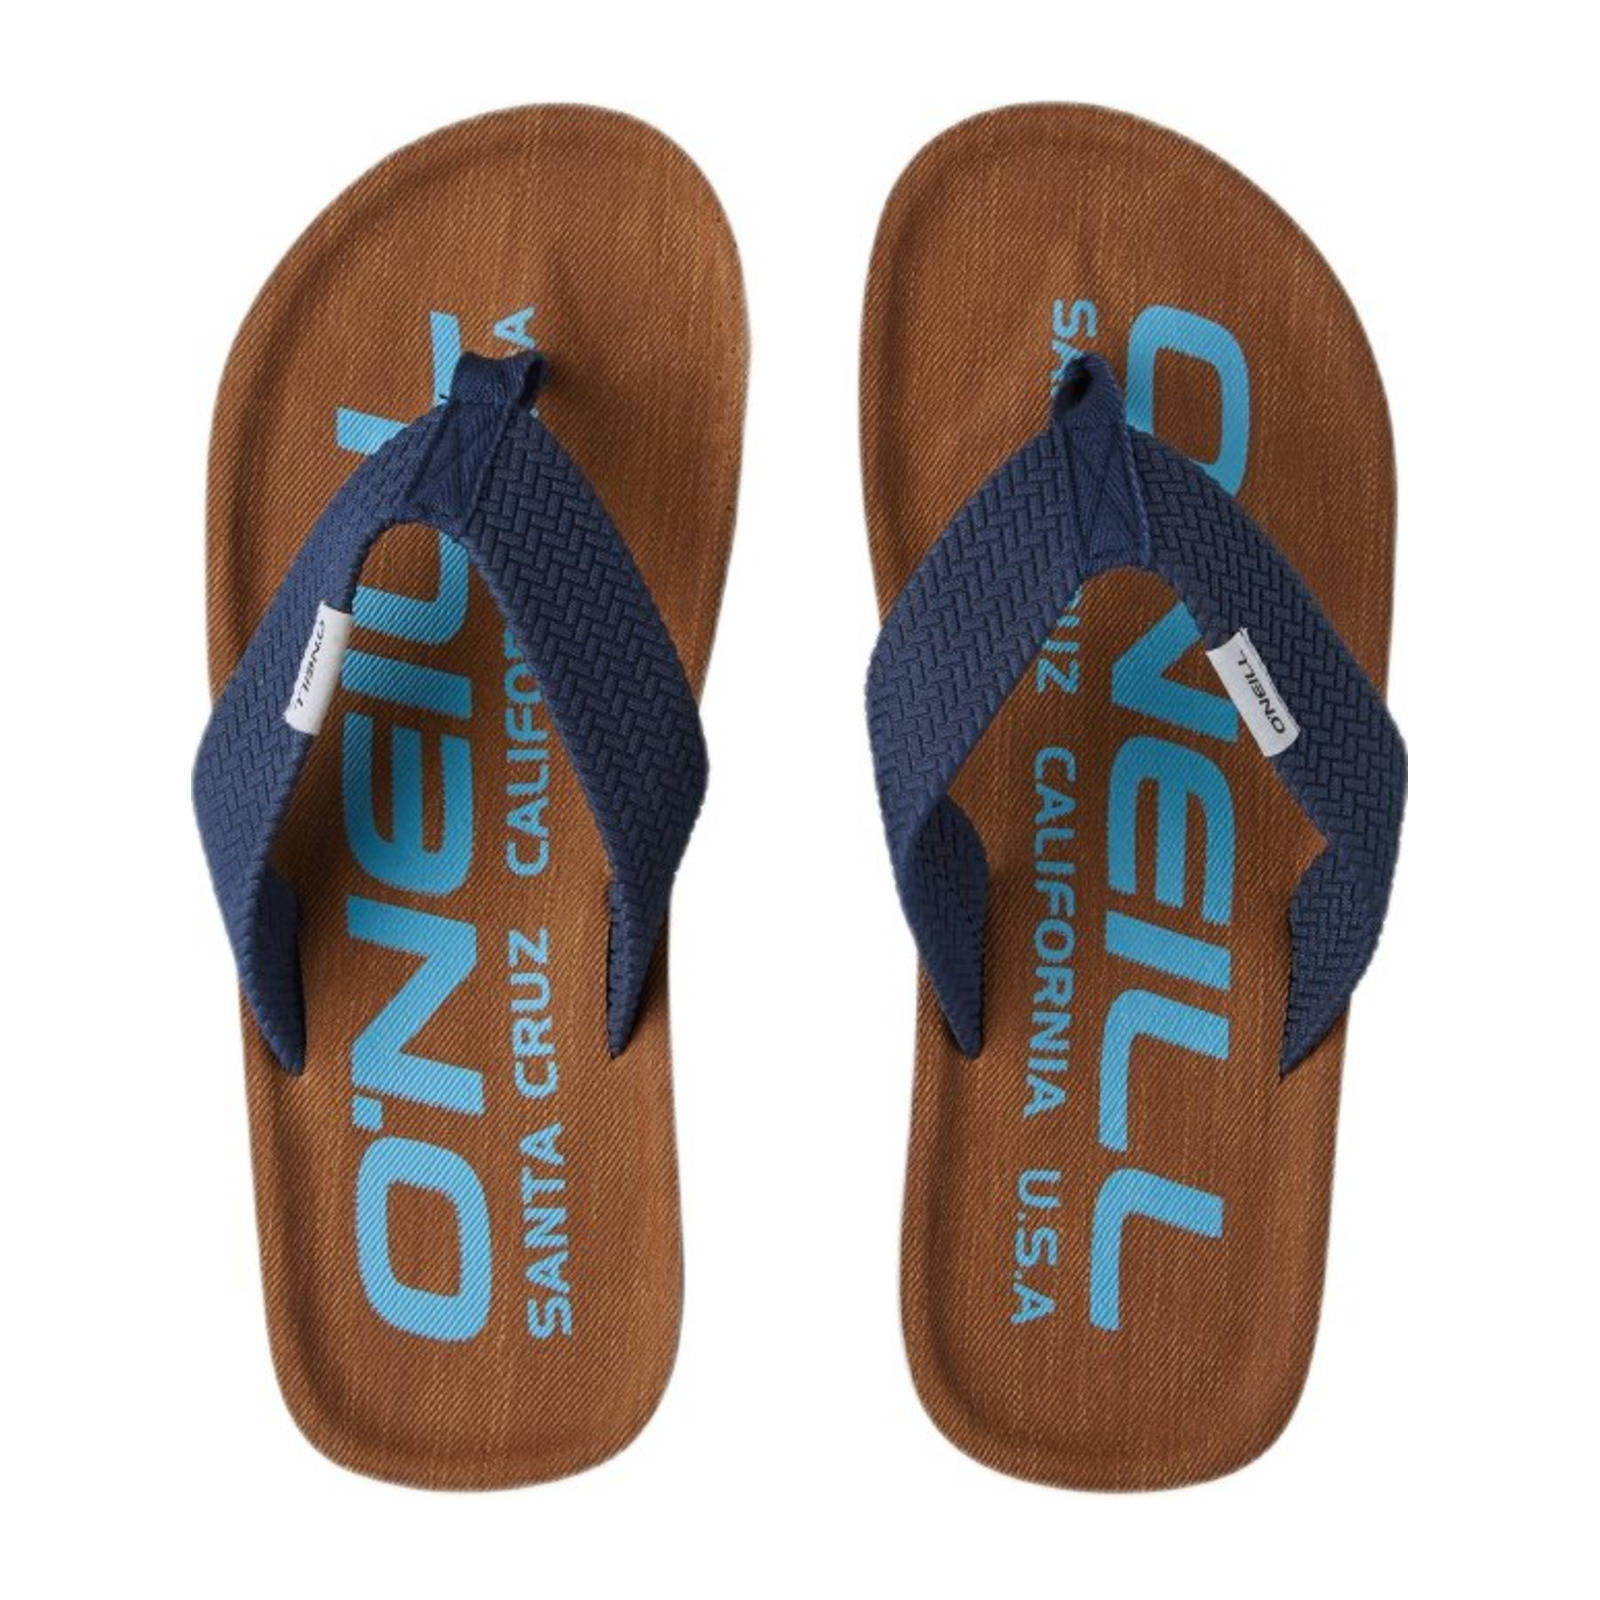 O'Neill Chad Logo Sandals teenslippers bruin/blauw online kopen